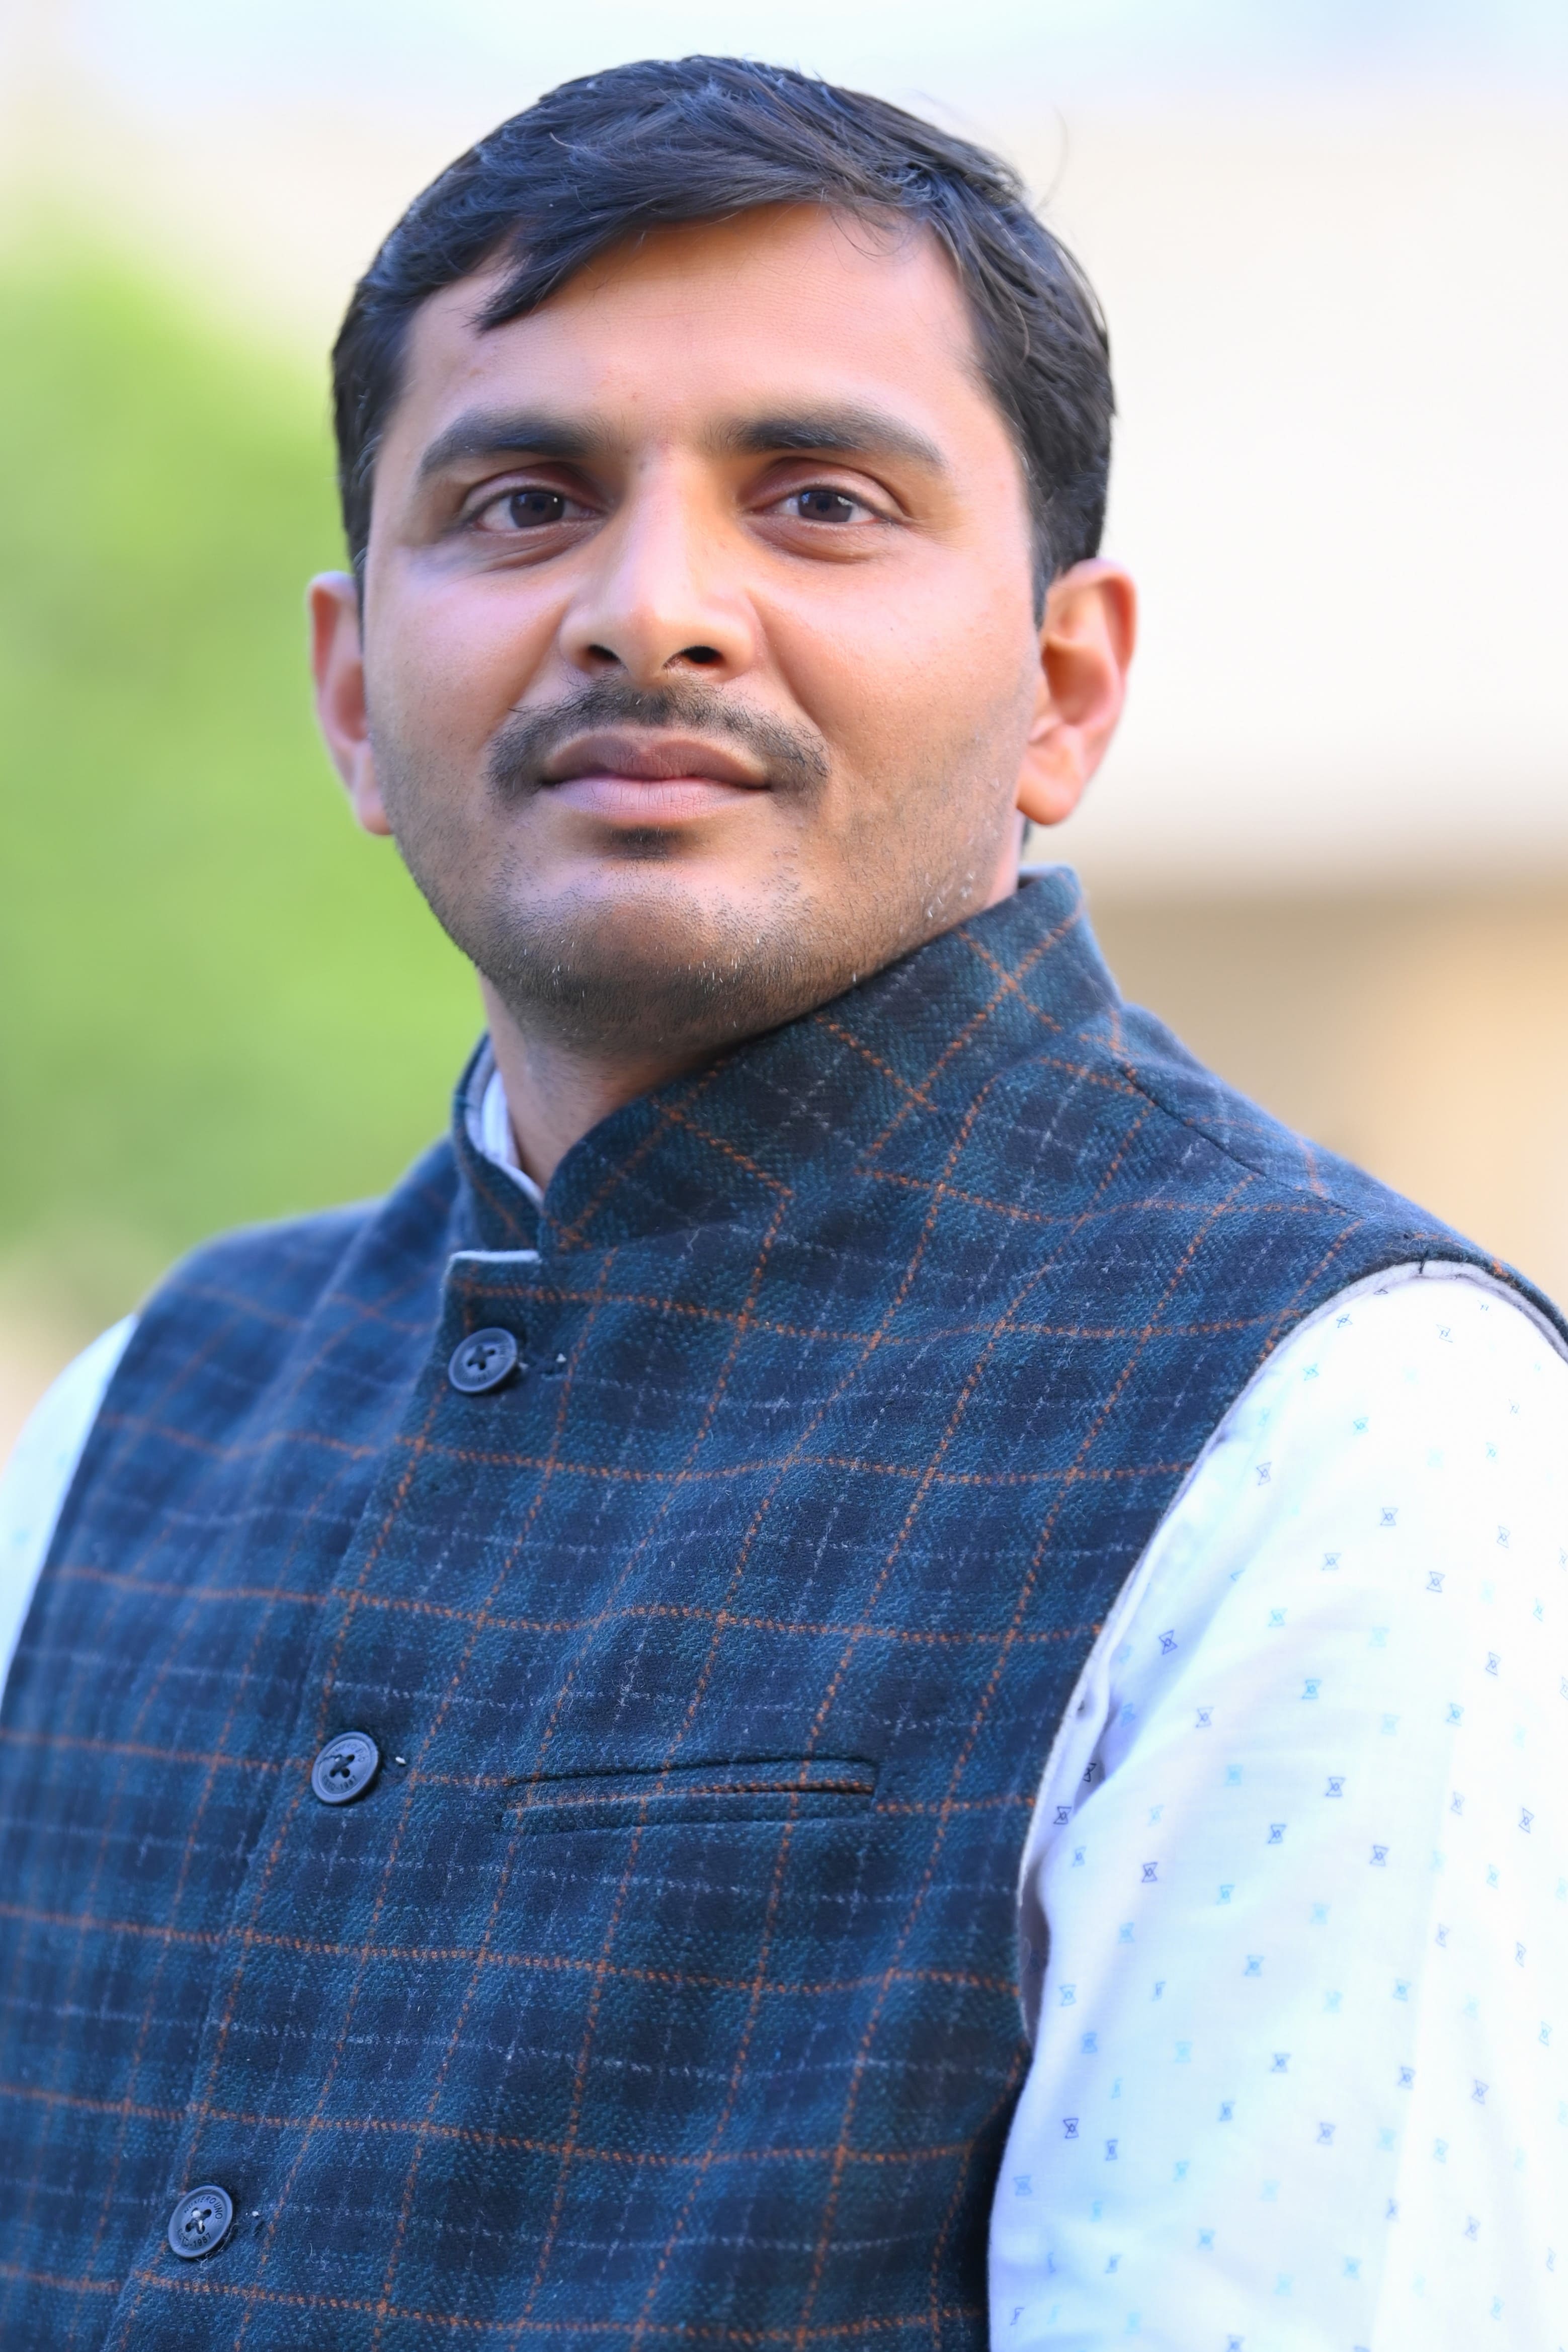 Mr. Rajeev Ranjan